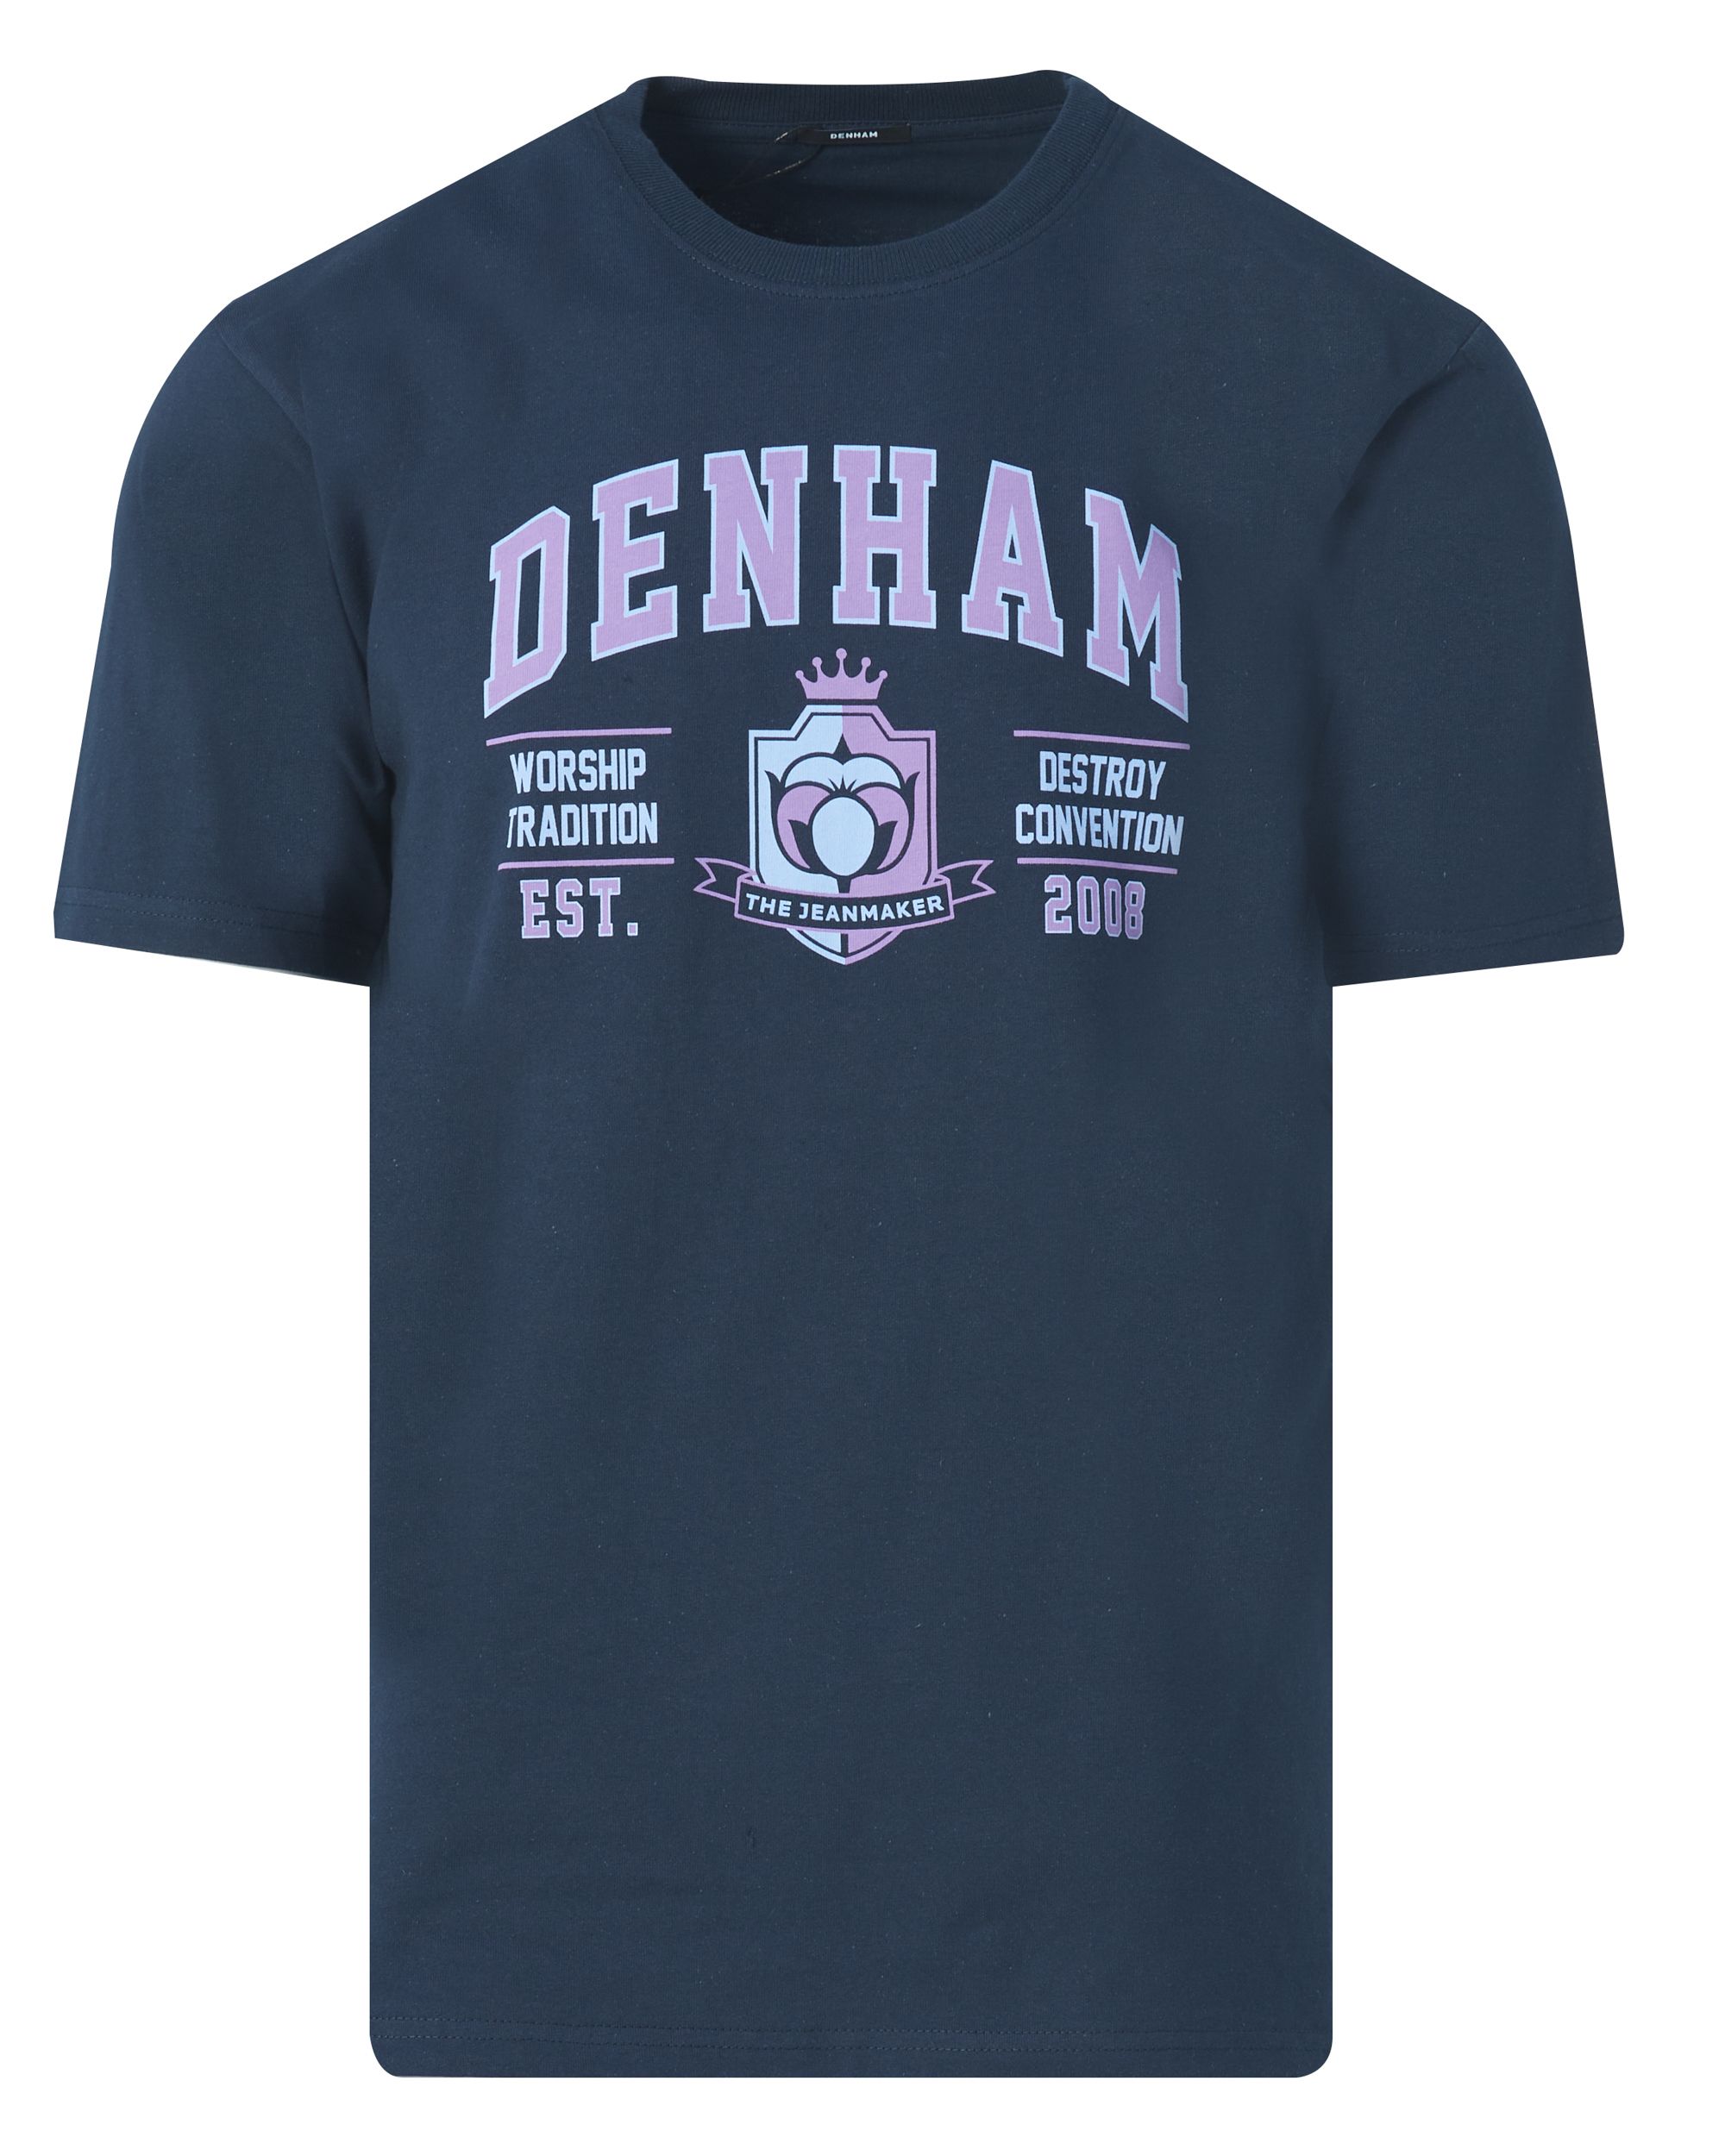 DENHAM Lond T-shirt KM Donker blauw 085184-001-L